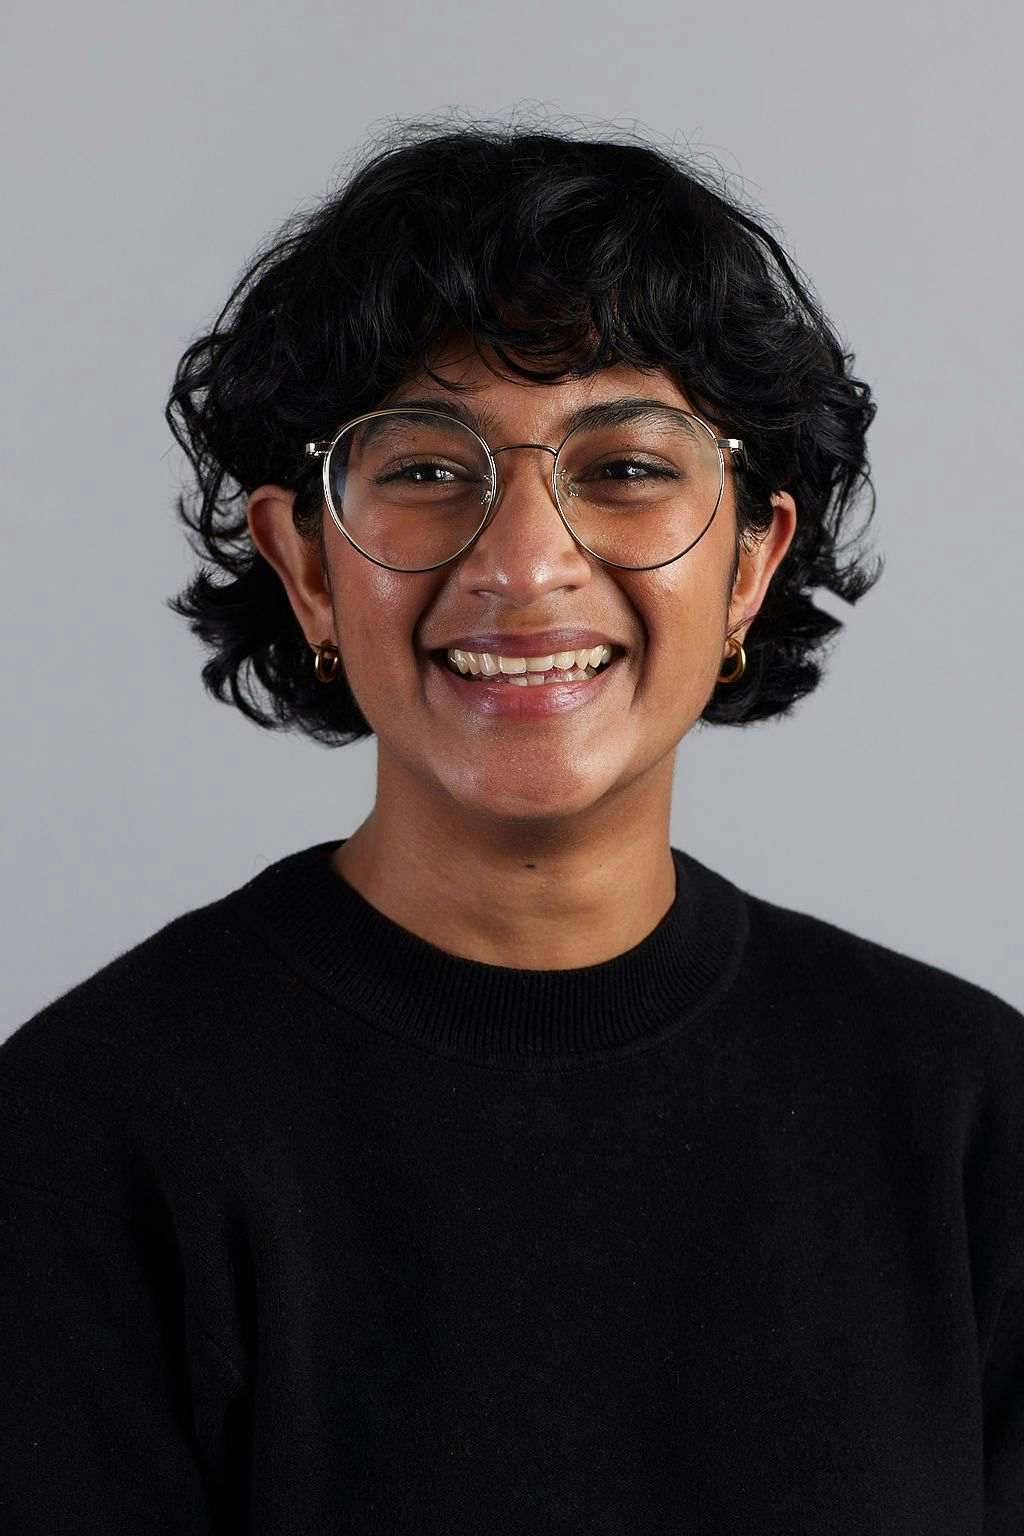 Headshot of Shehelah wearing glasses and a black top.